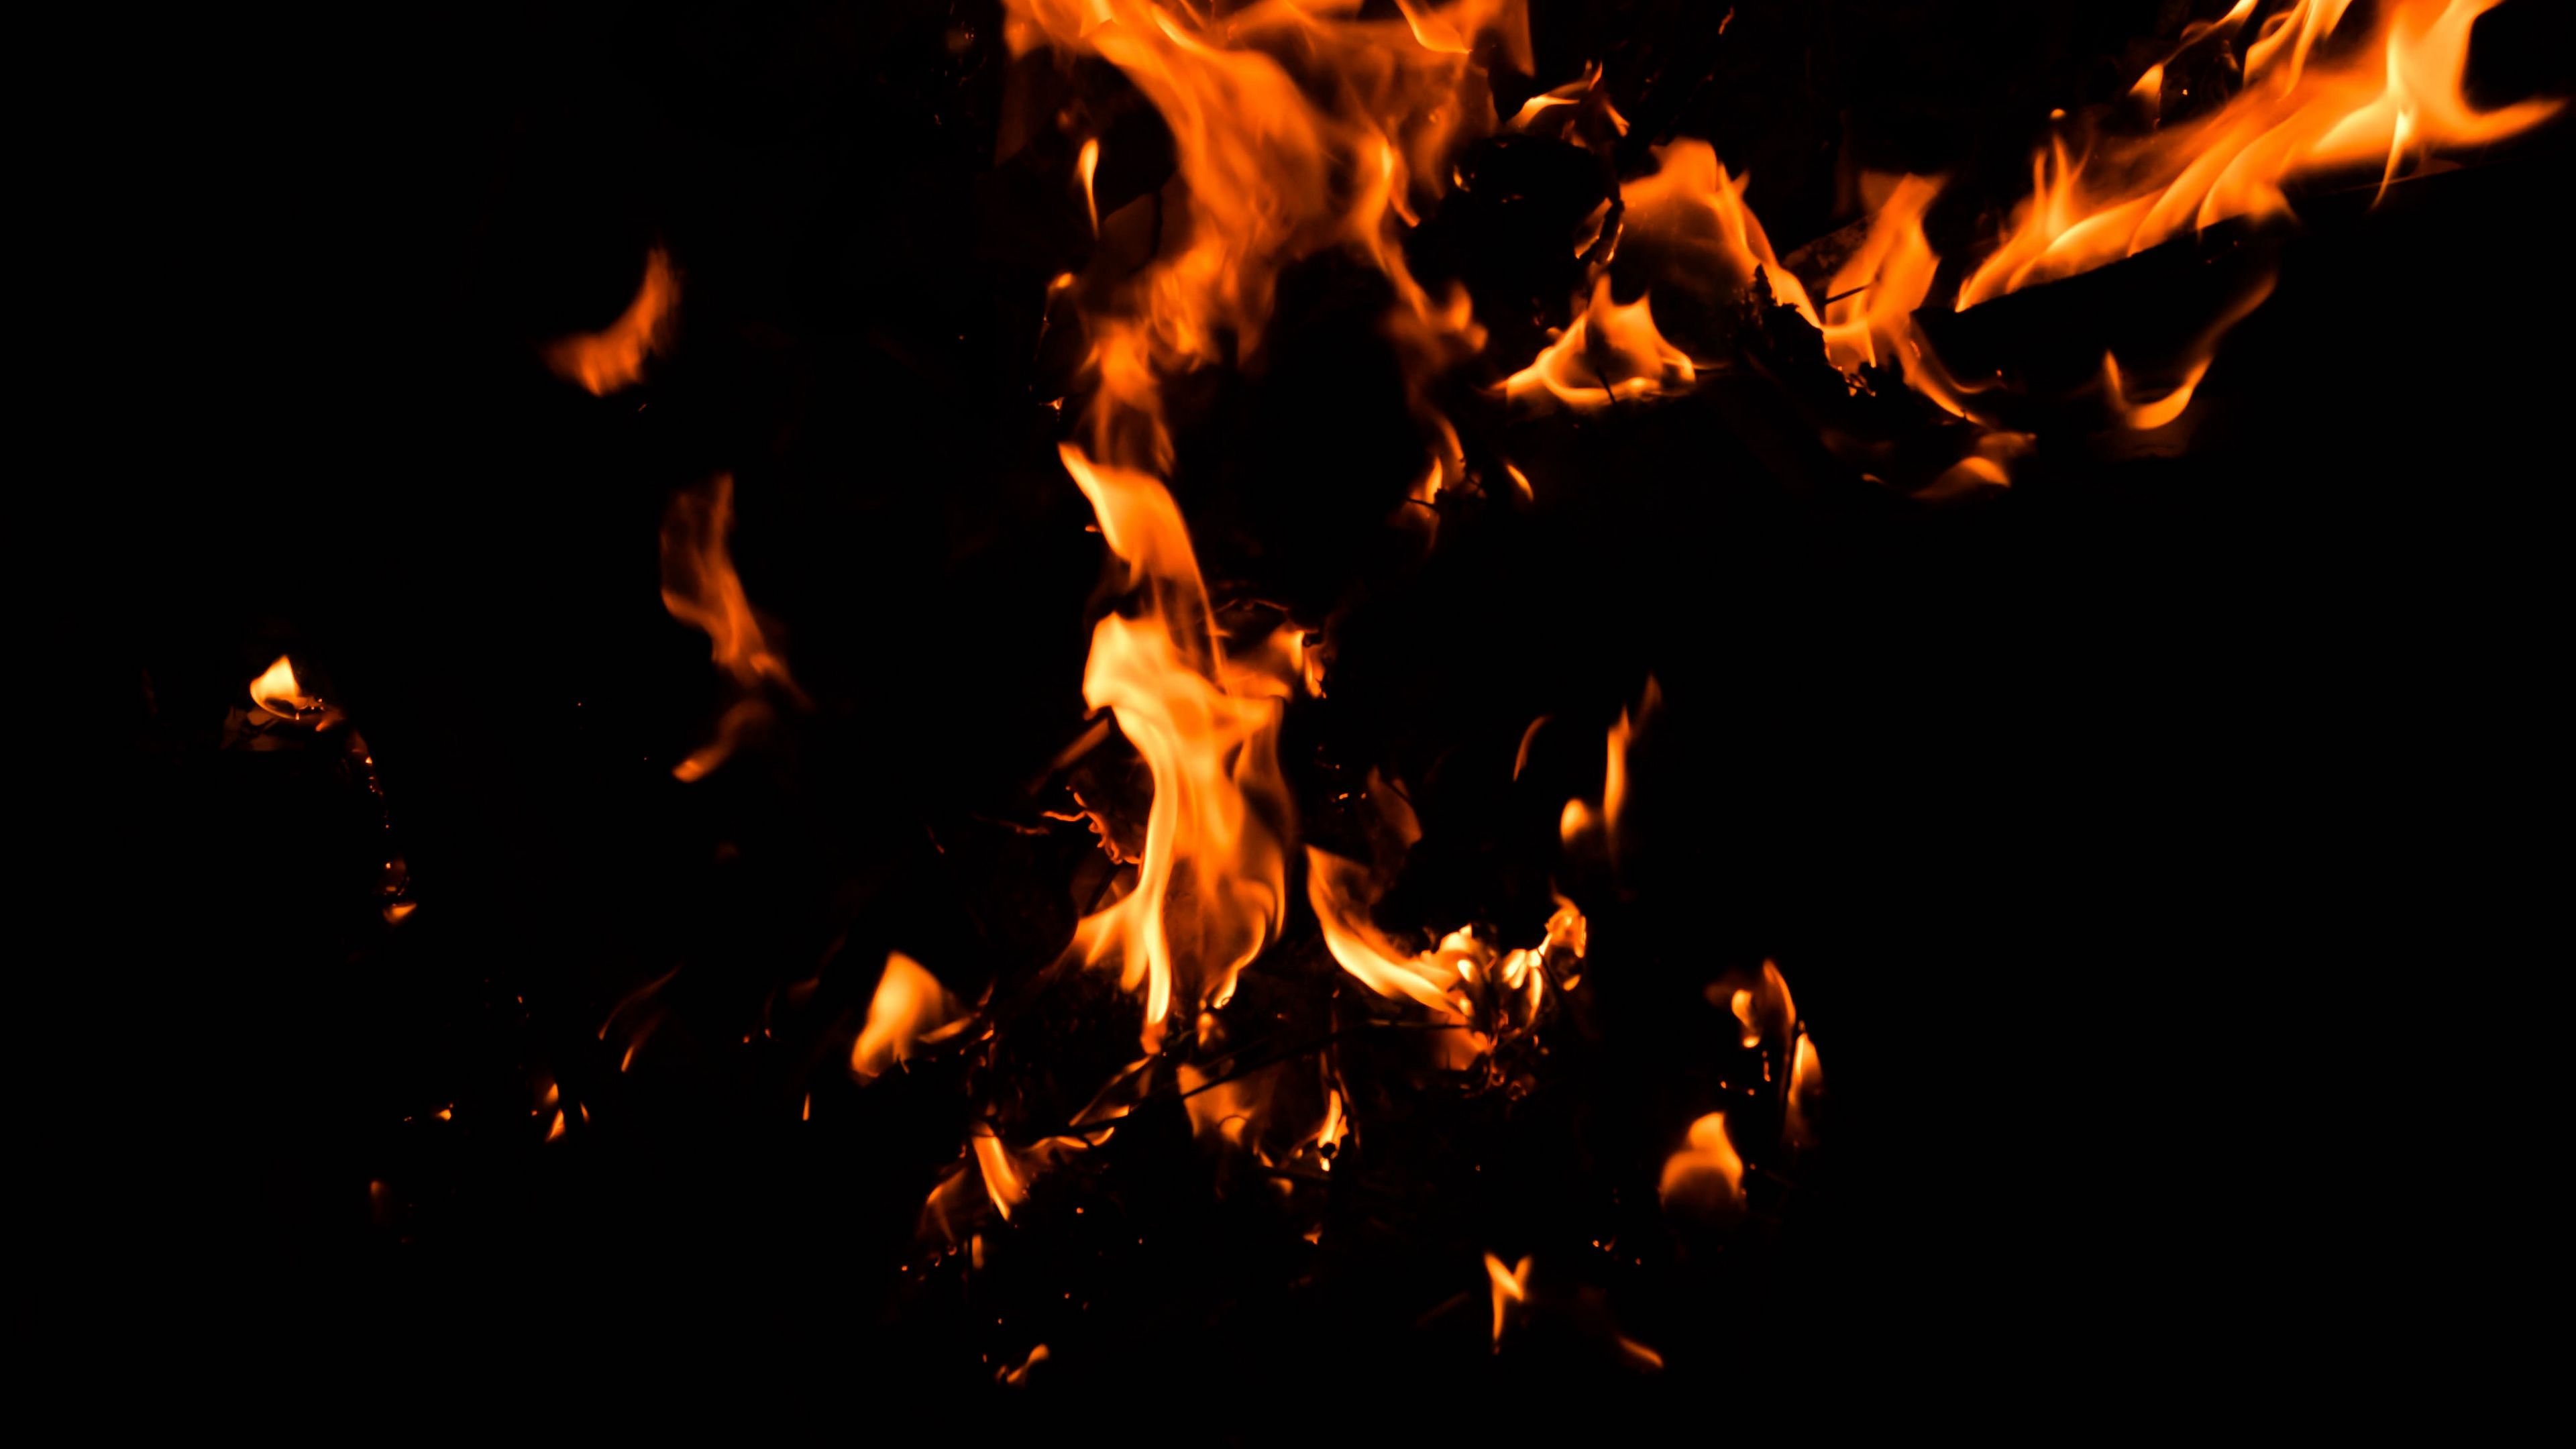 Download wallpaper 3840x2160 fire, bonfire, dark, flame, black 4k uhd 16:9 HD background